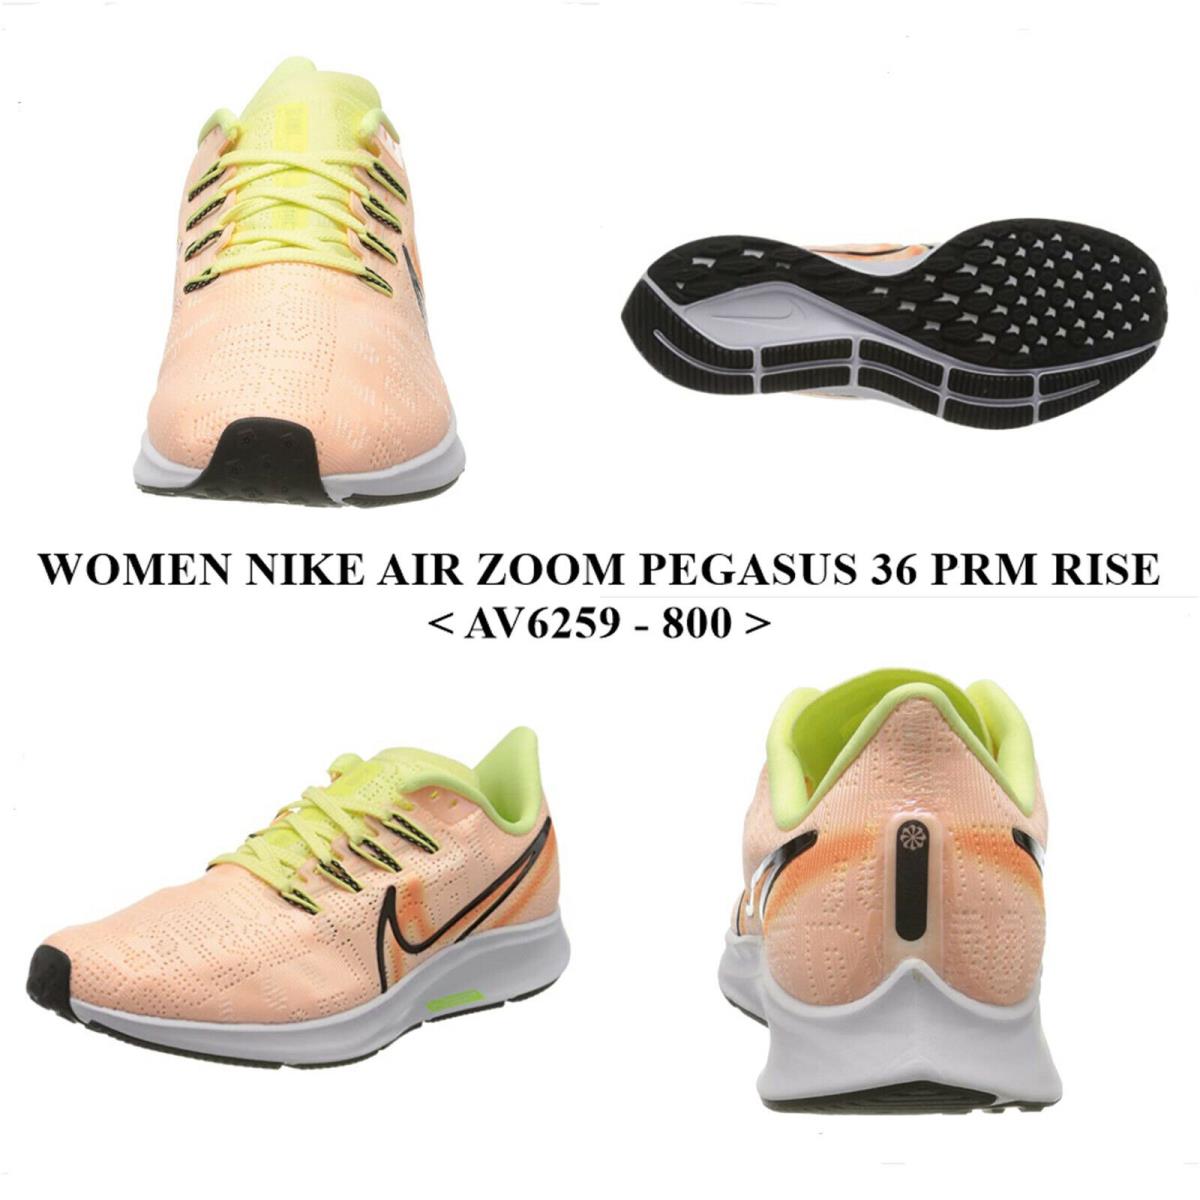 Women`s Nike Air Zoom Pegasus 36 Prm Rise <AV6259 - 800> Running/casual Shoe`s